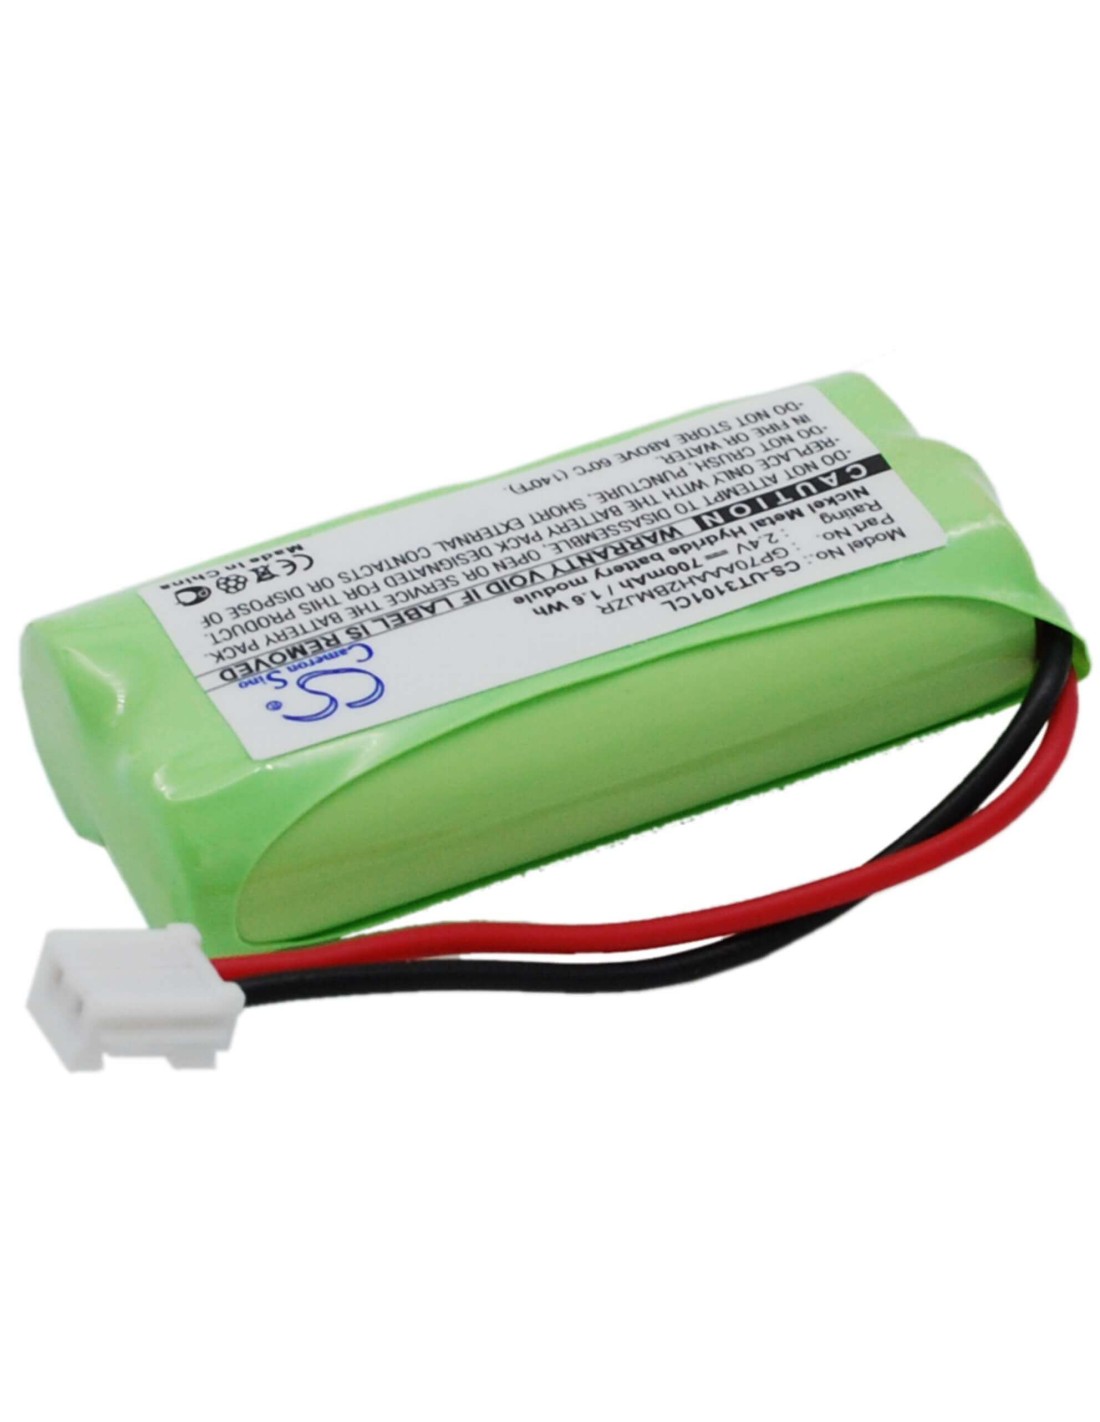 Battery for Uniden bt-101, bt1011, bt-1011, bt-1018 2.4V, 700mAh - 1.68Wh